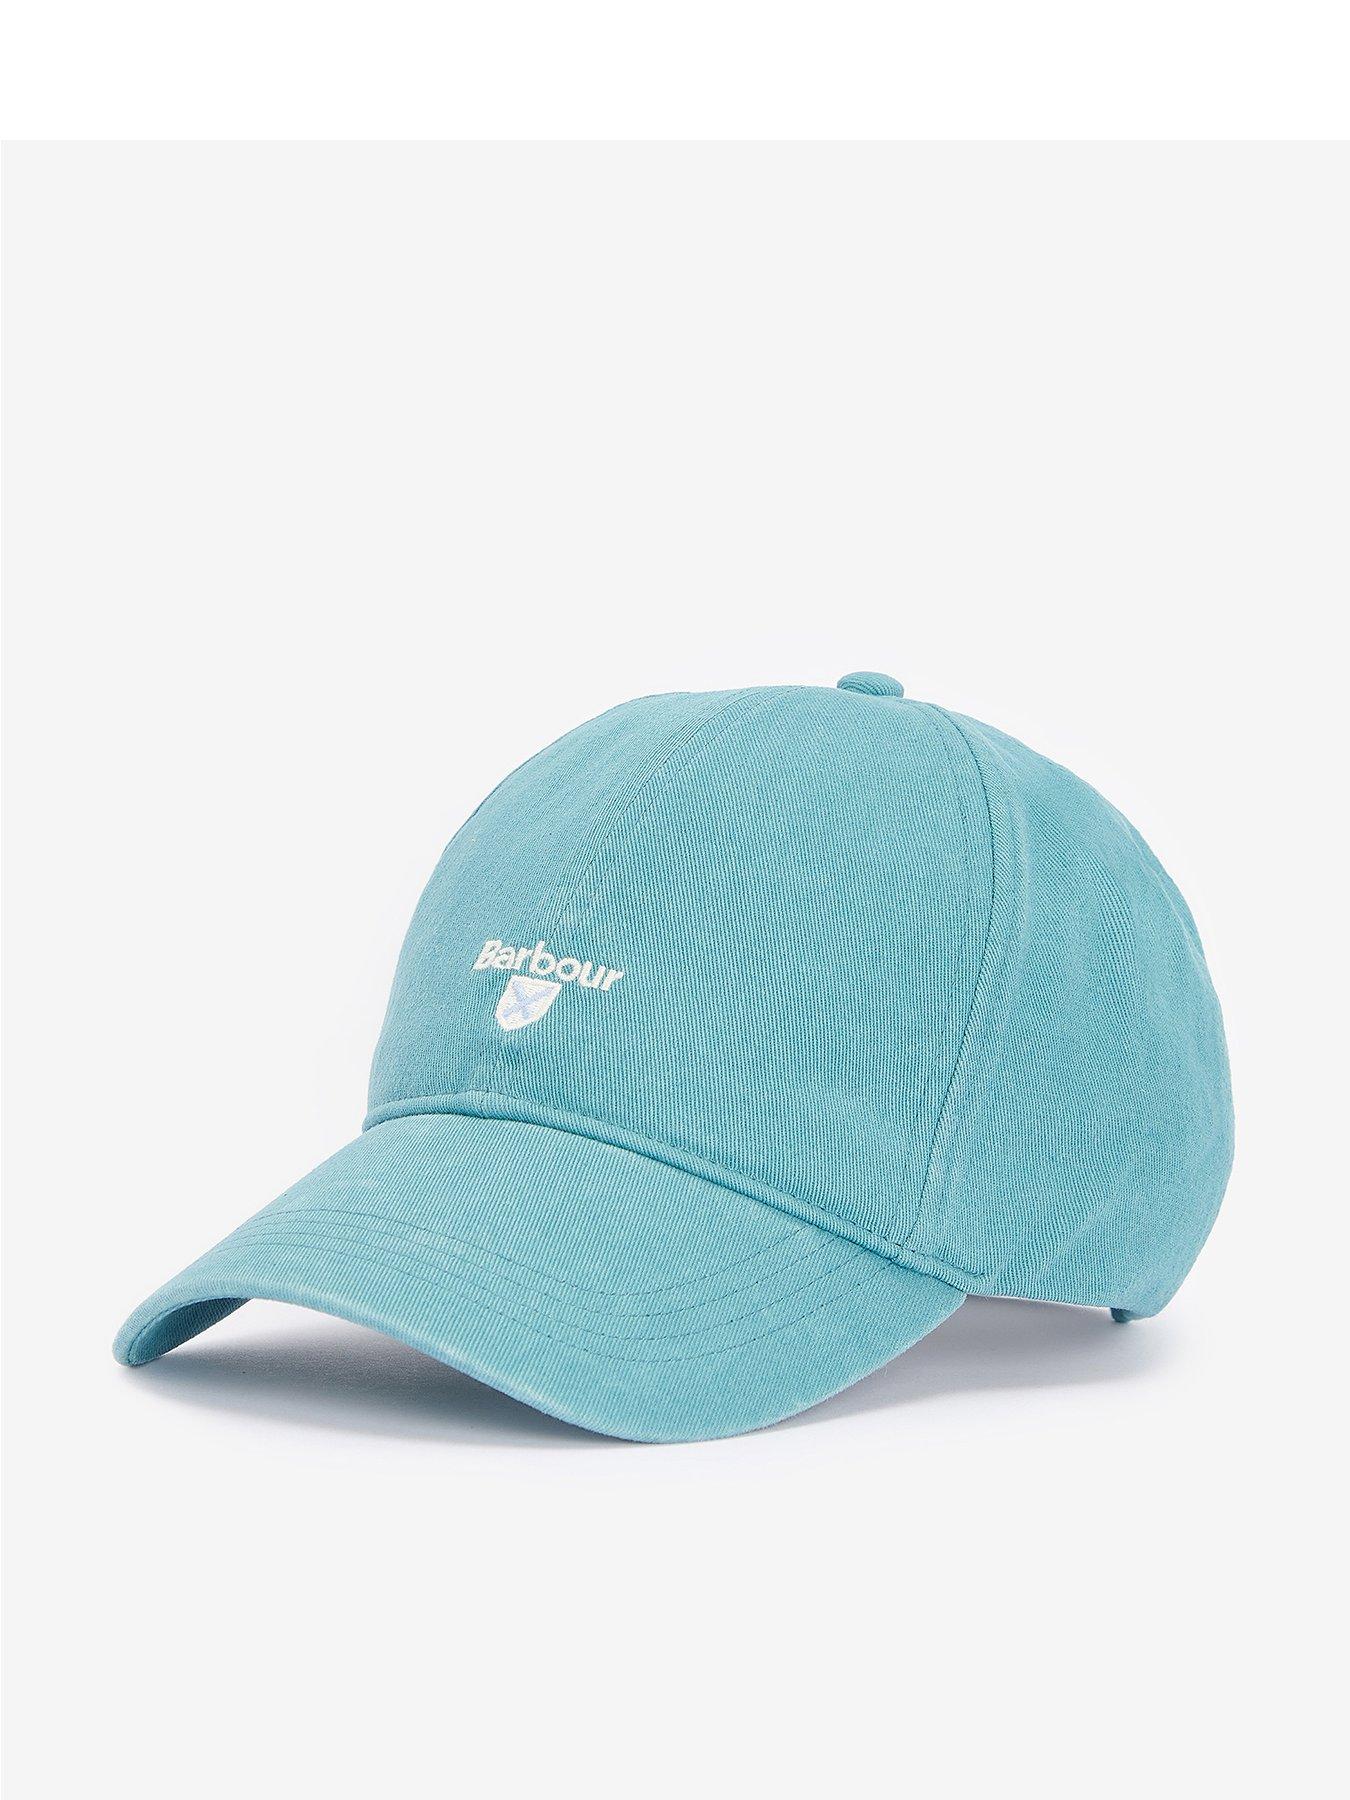 UNDER ARMOUR Men's Golf 96 Hat - Blue